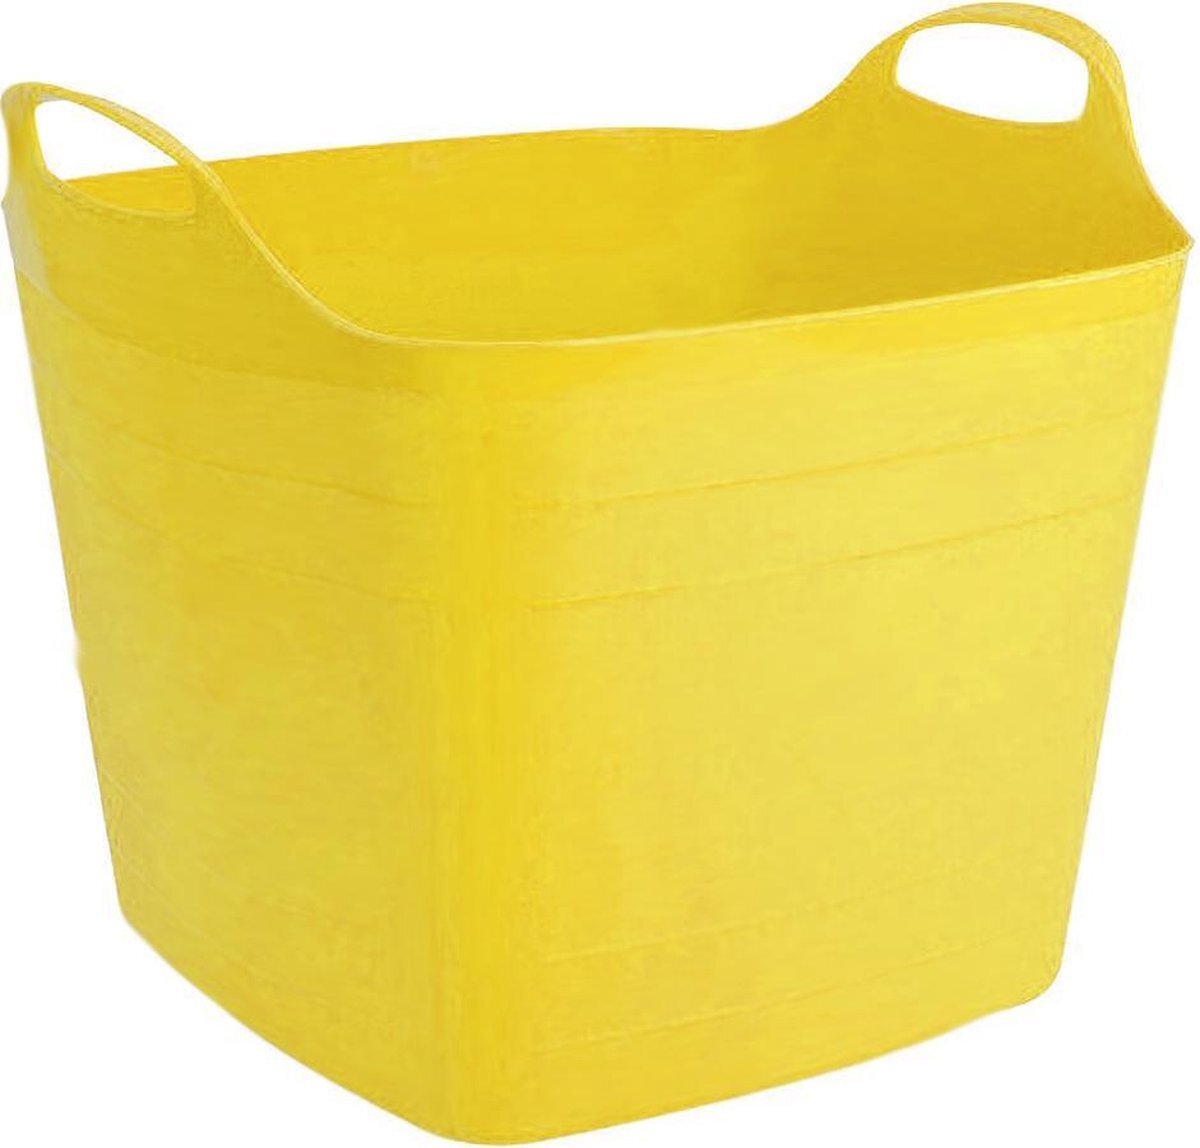 Forte Plastics Flexibele kuip emmer/wasmand vierkant geel 40 liter - 42 x 42 cm